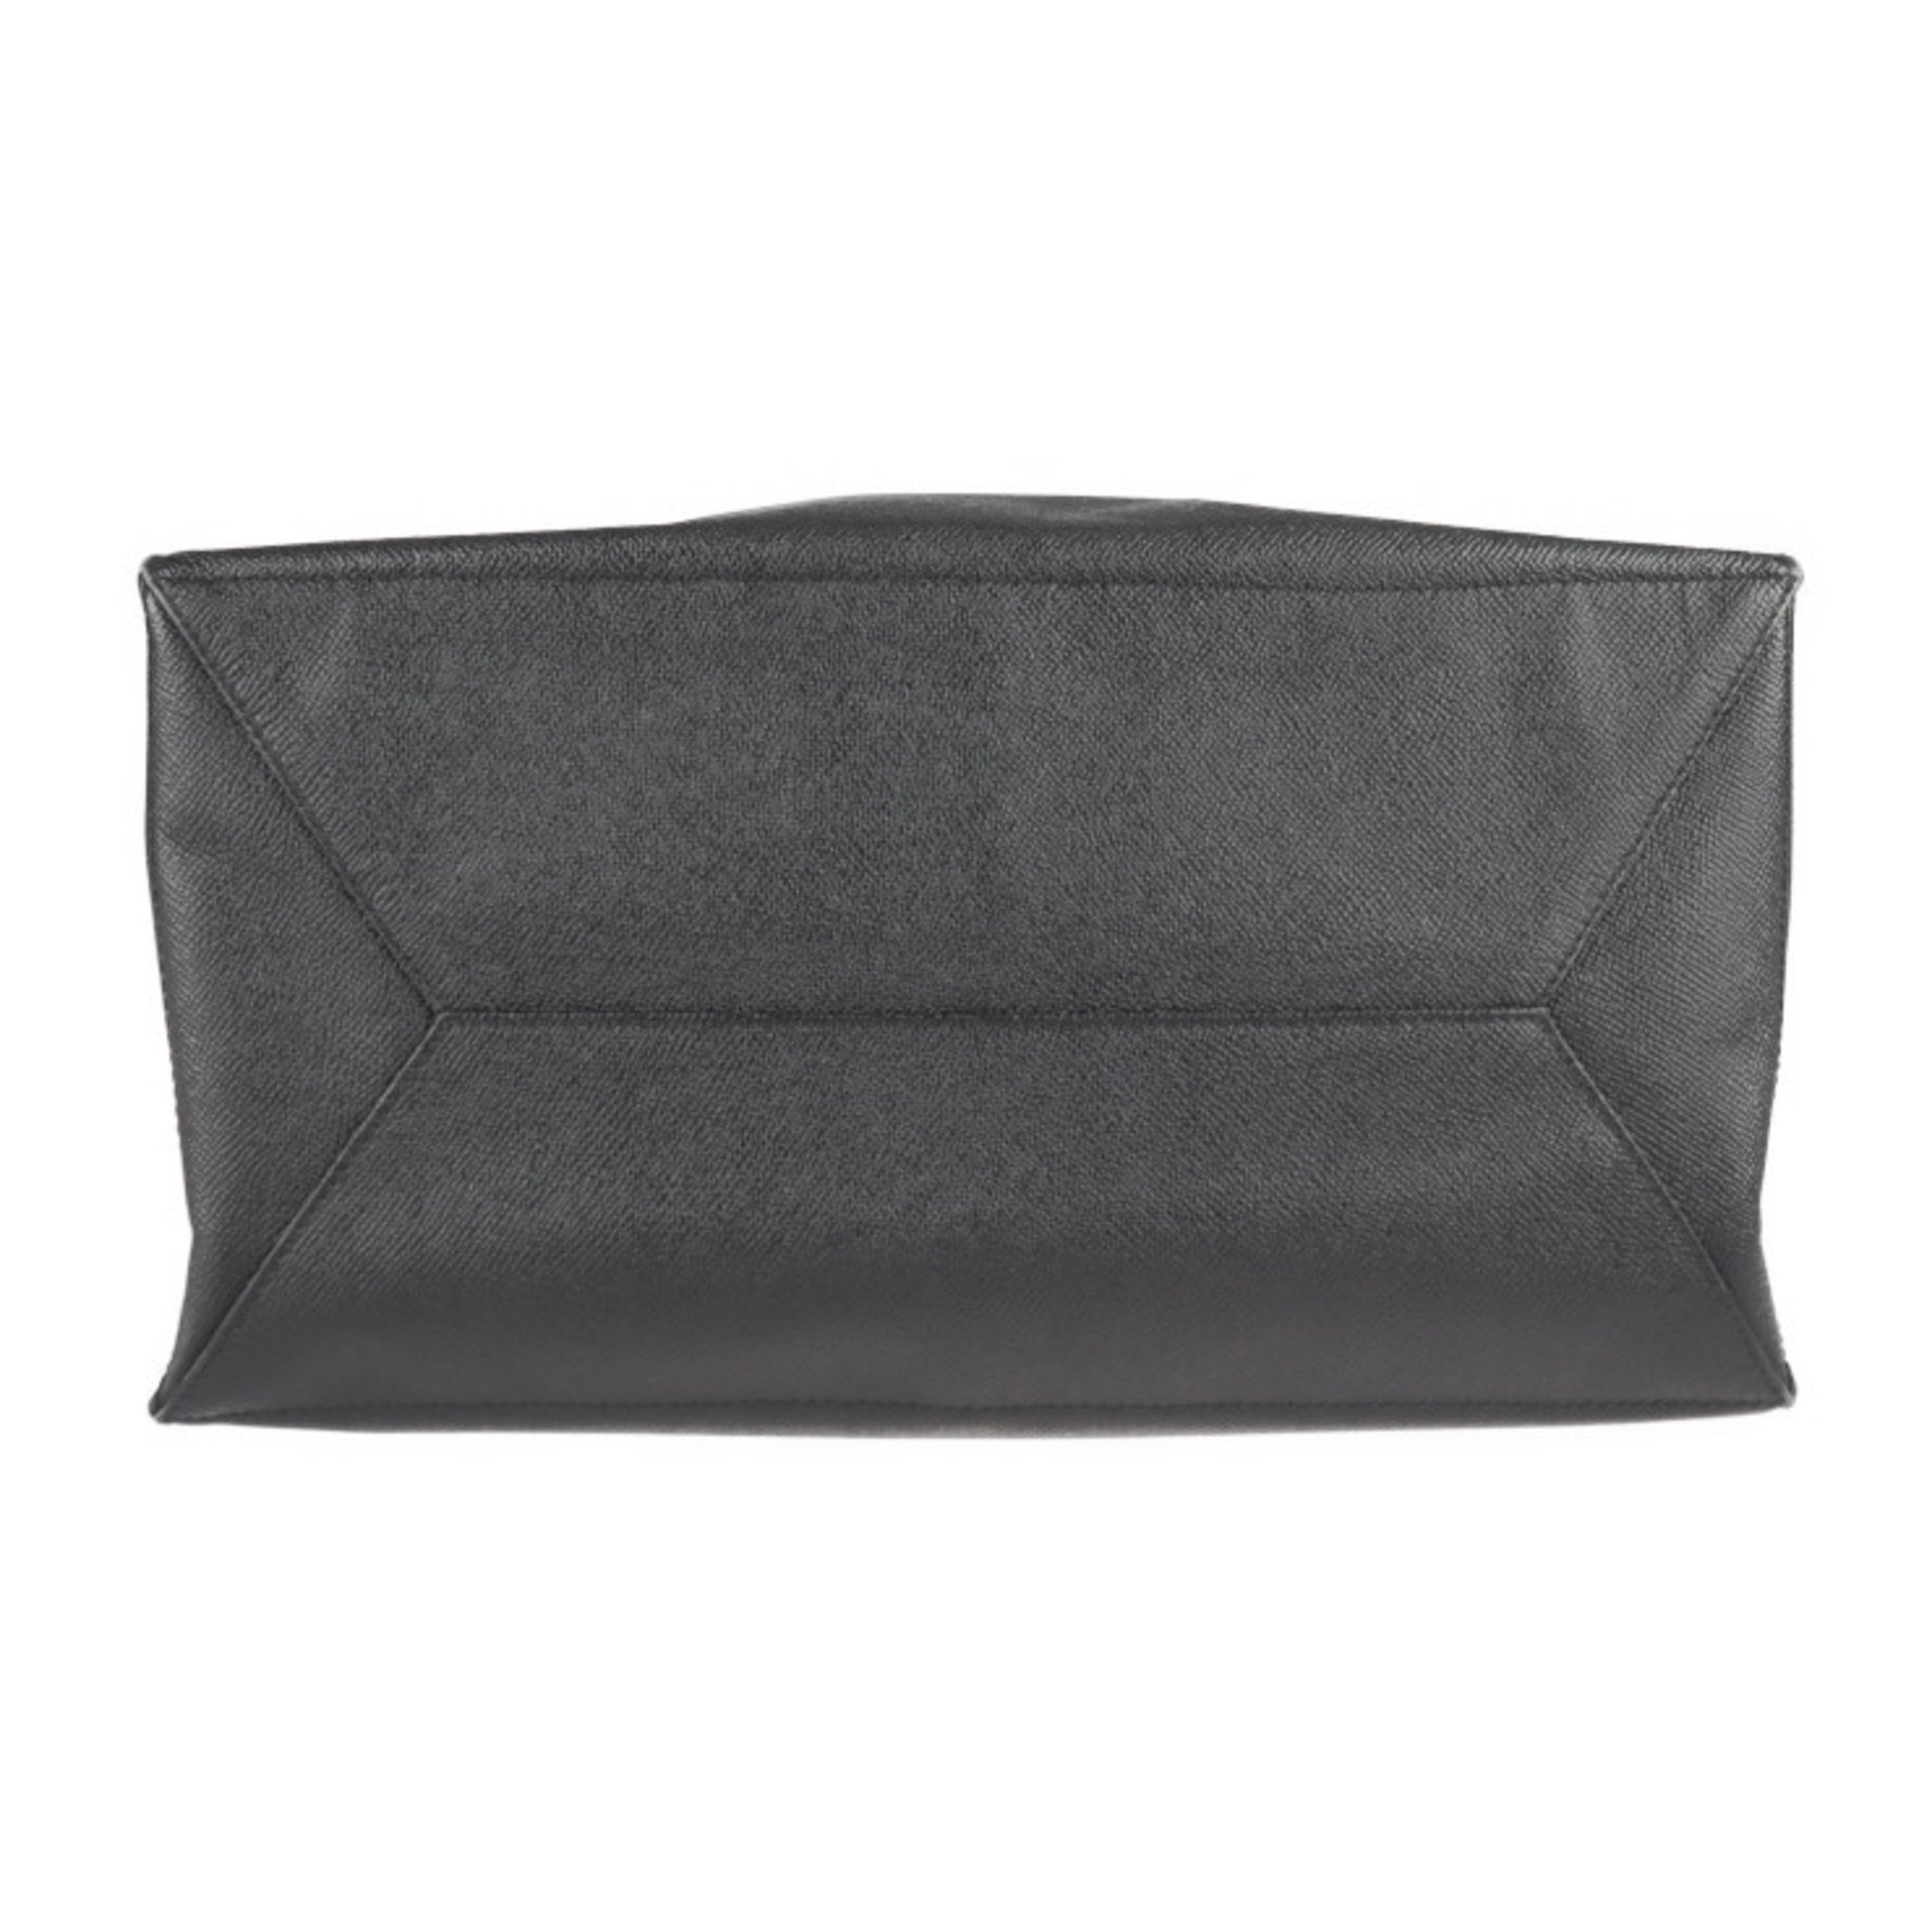 GIVENCHY Givenchy CLASSIC ICONIC tote bag 5742621 leather black 2WAY handbag shoulder